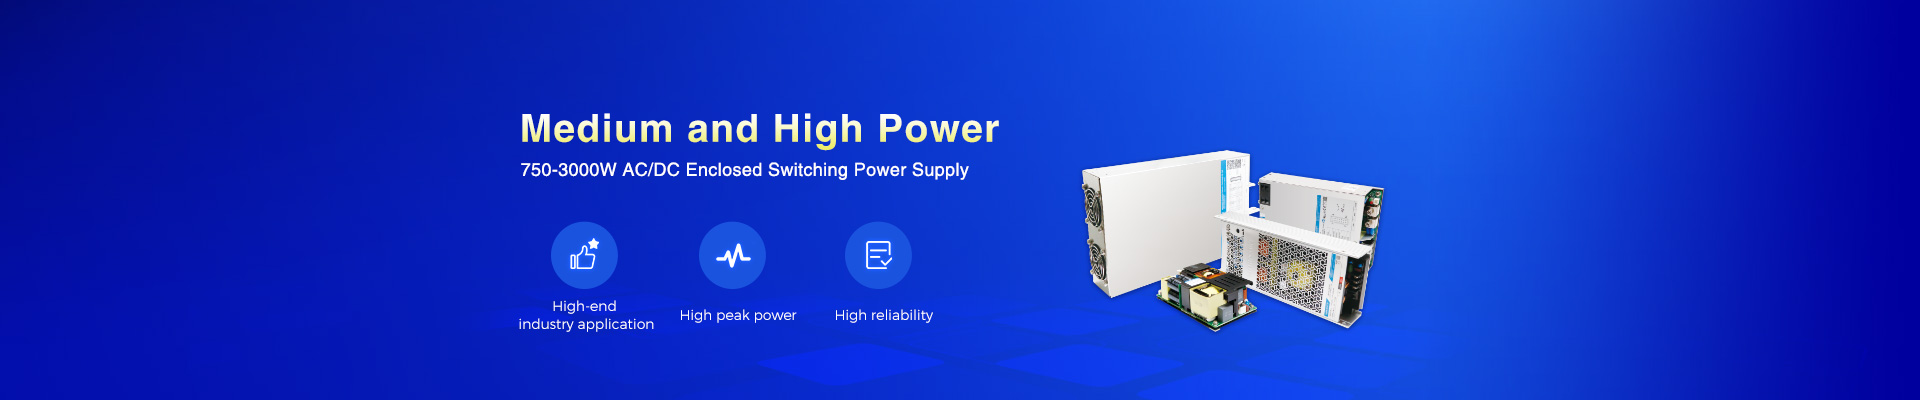 Medium-high power 750-3000W AC/DC Enclosed Switching Power Supply